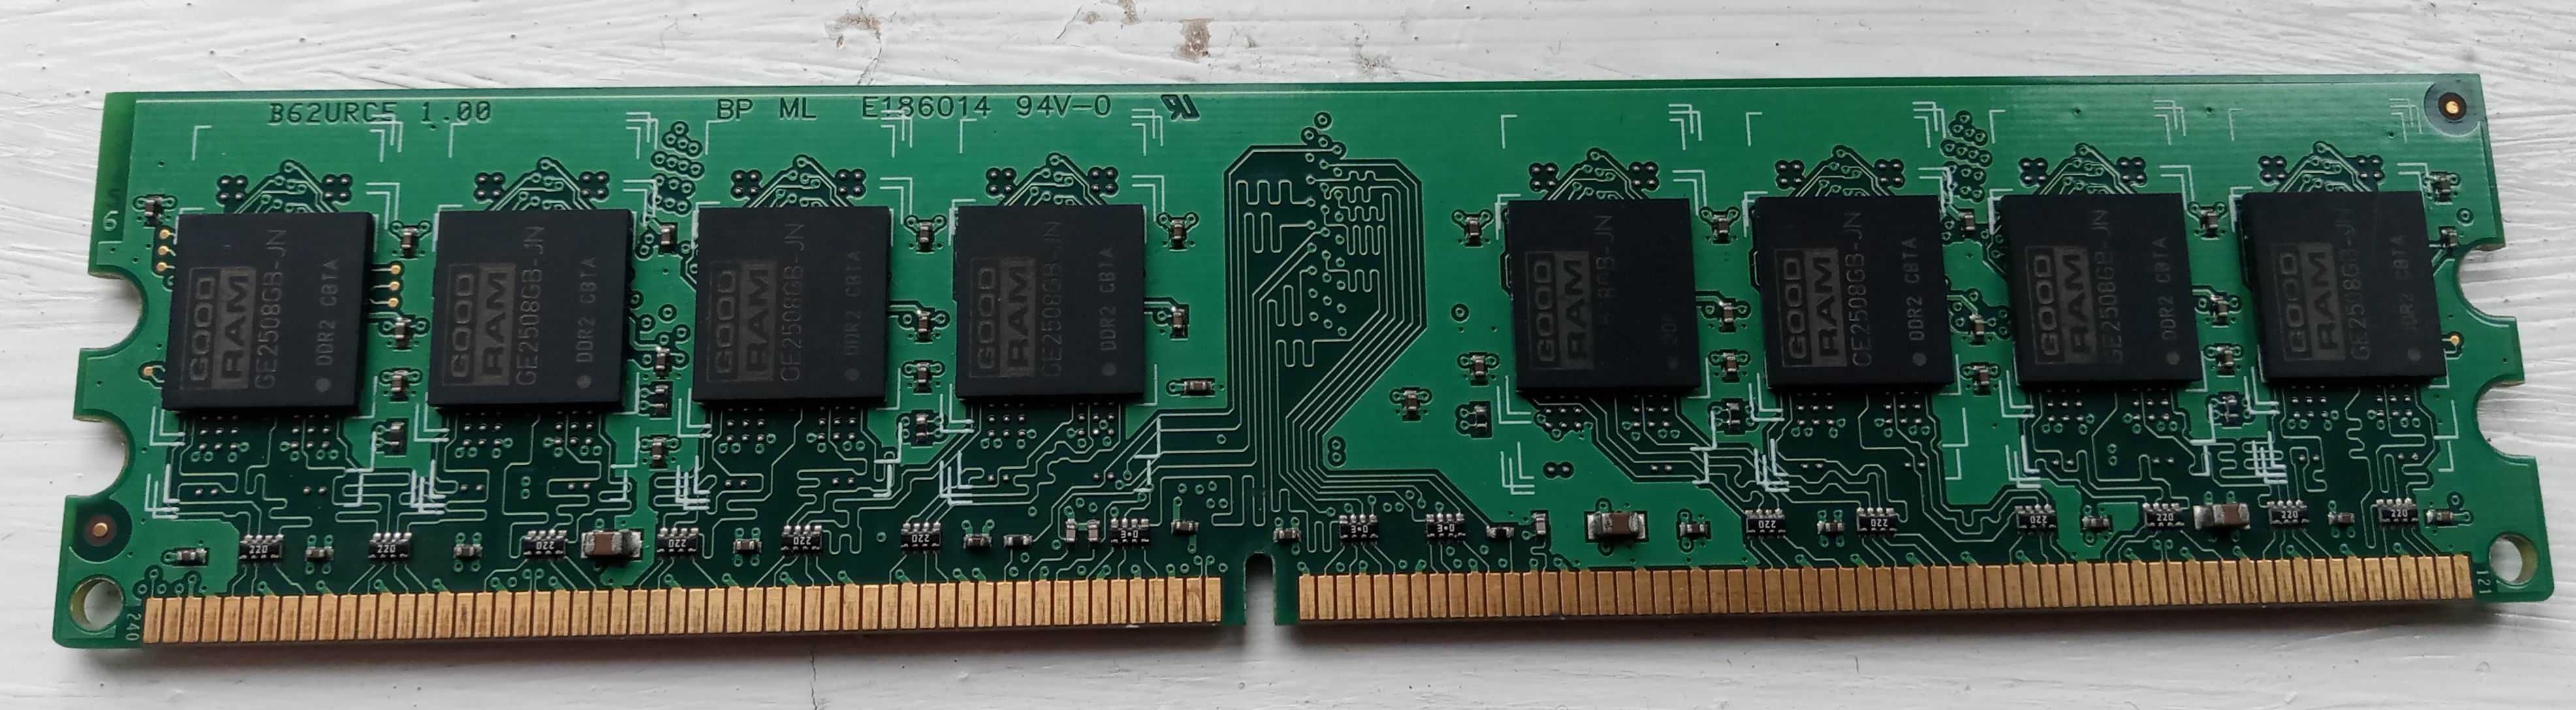 Pamięć RAM Goodram DDR2 512 MB PC5300